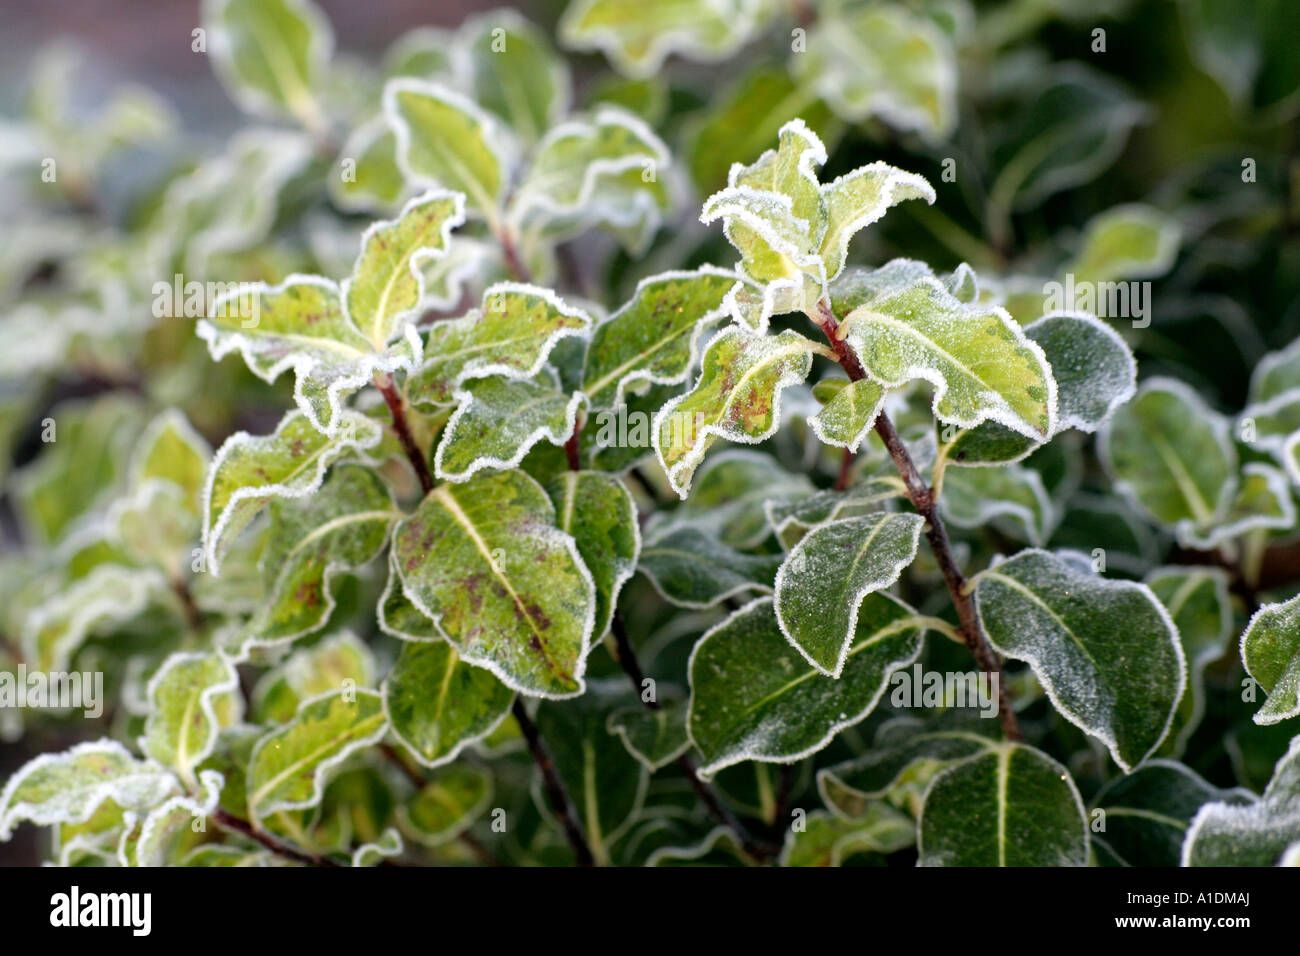 Pittosporum tenuifolium Holbrook showing frosted foliage Stock Photo